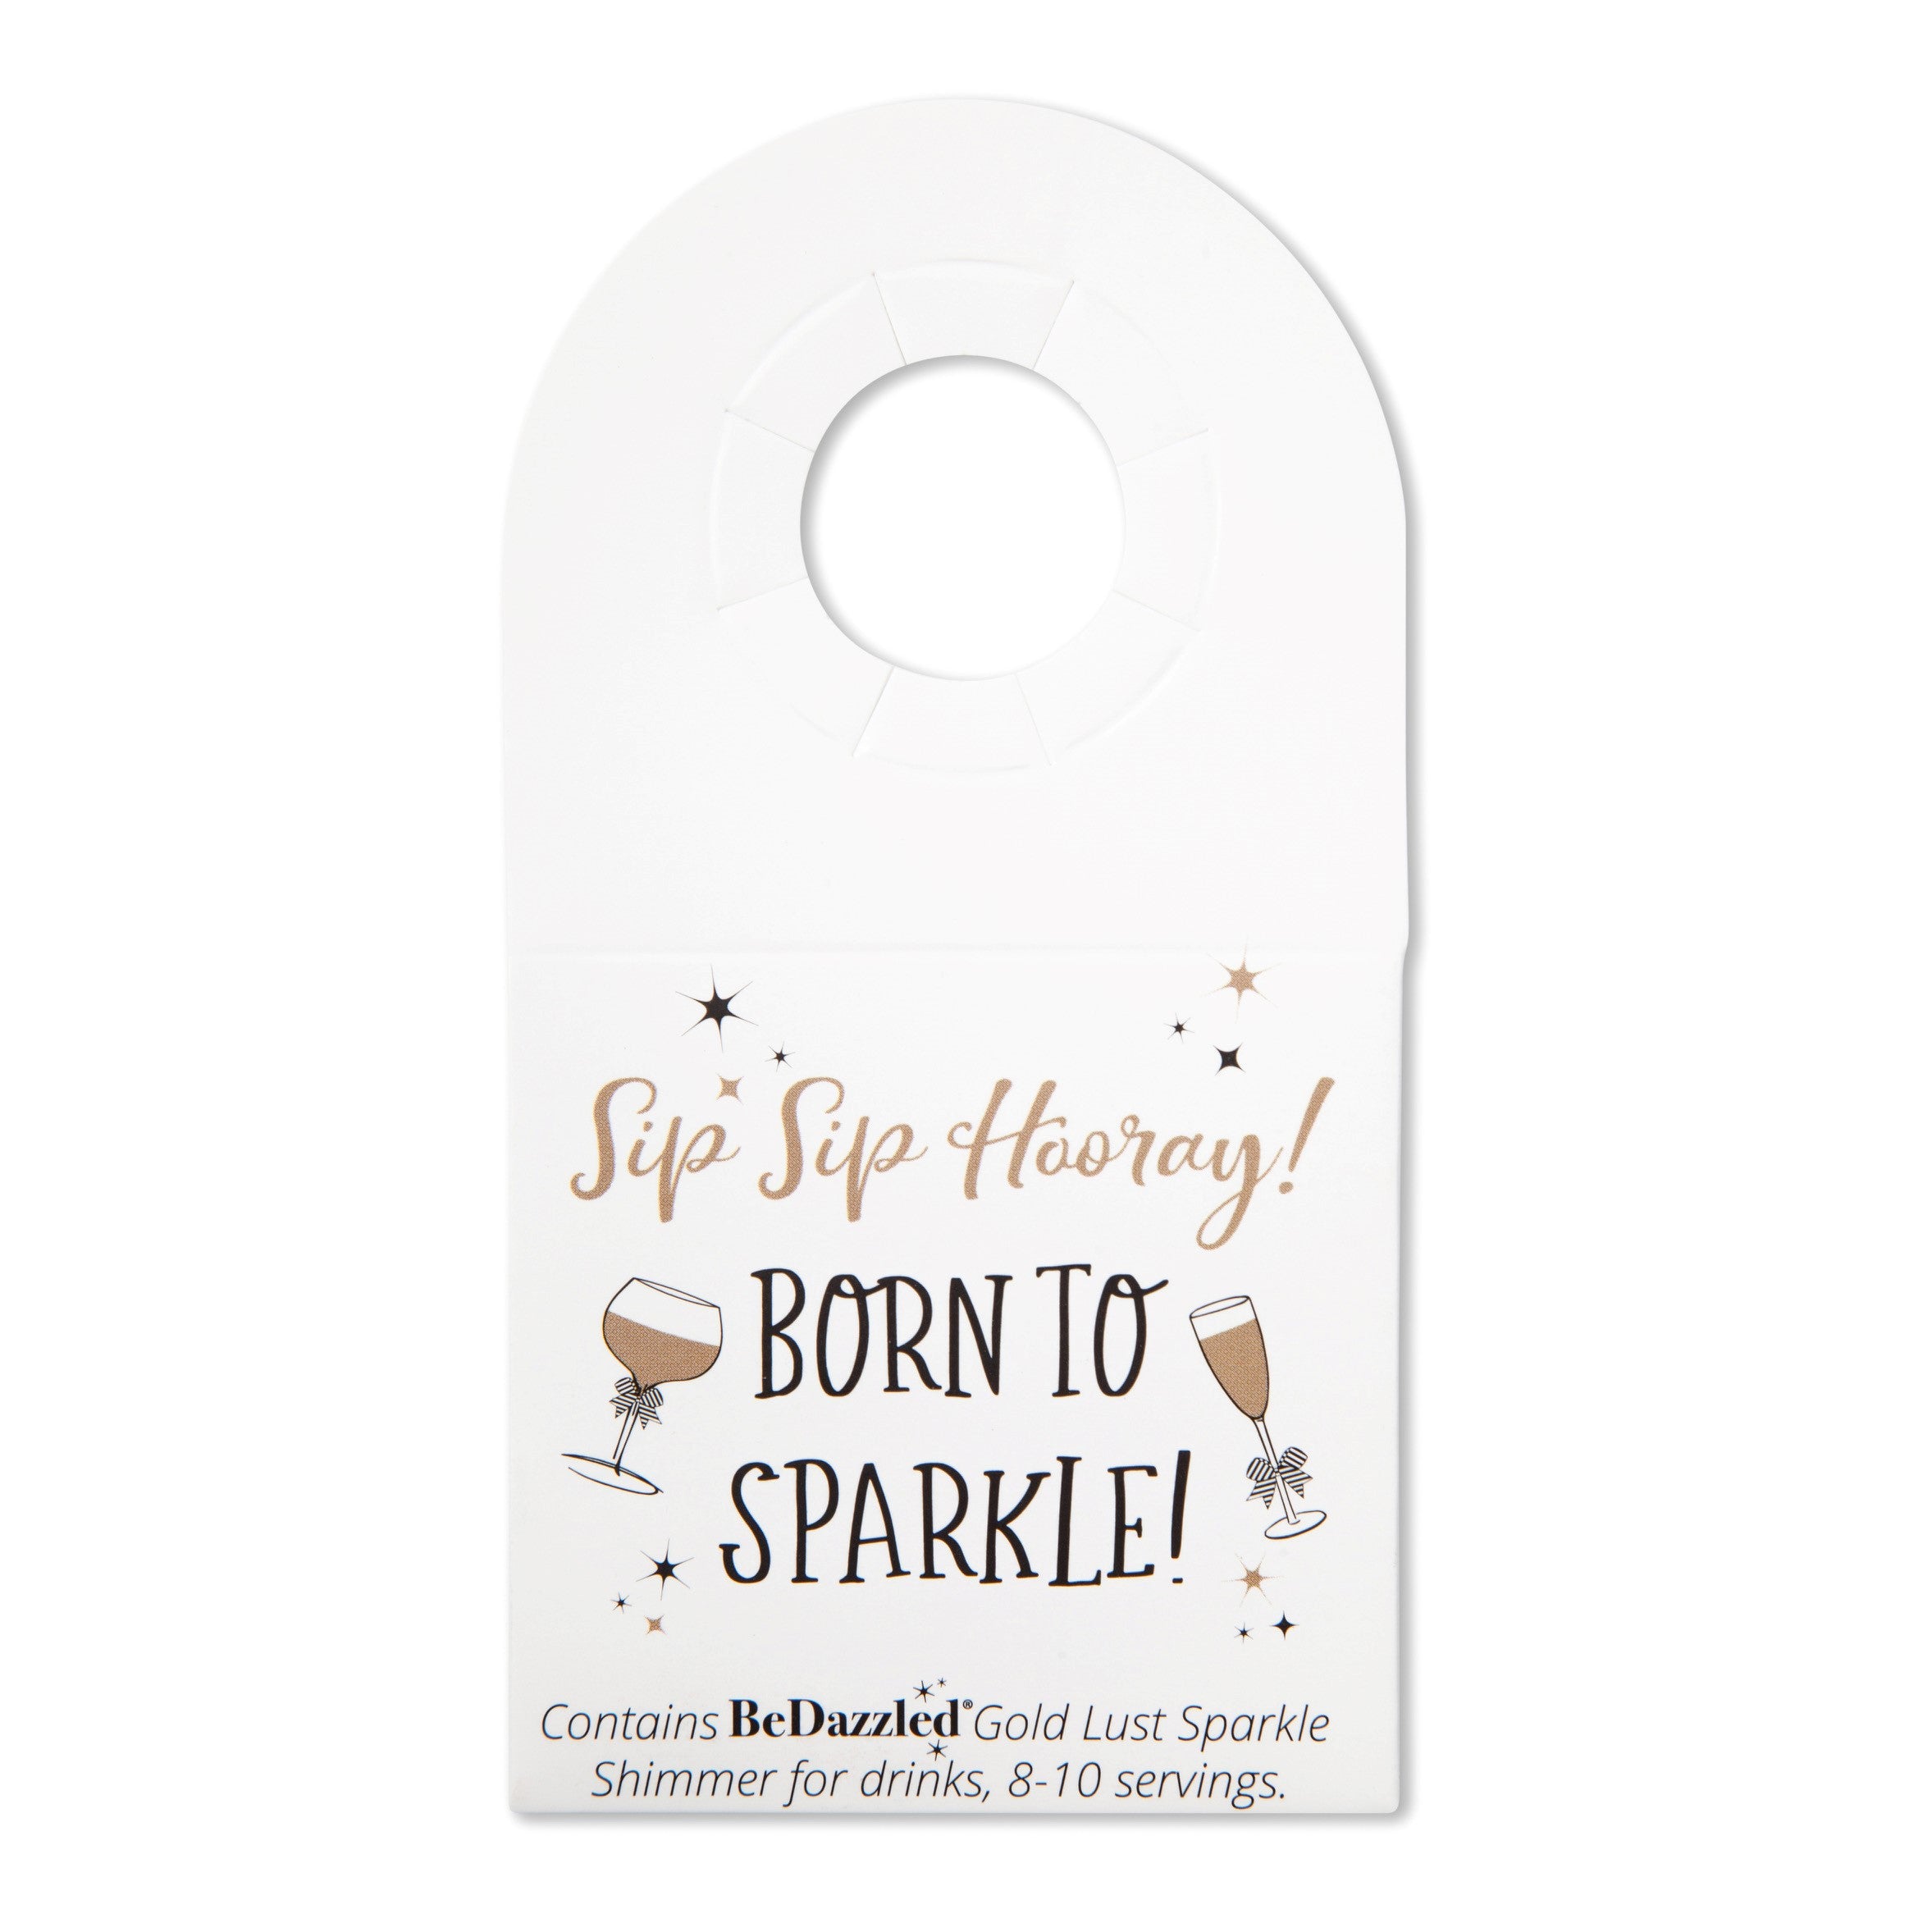 Sip Sip Hooray! Born to Sparkle - bottle neck gift tag GOLD LUST sparkle shimmer